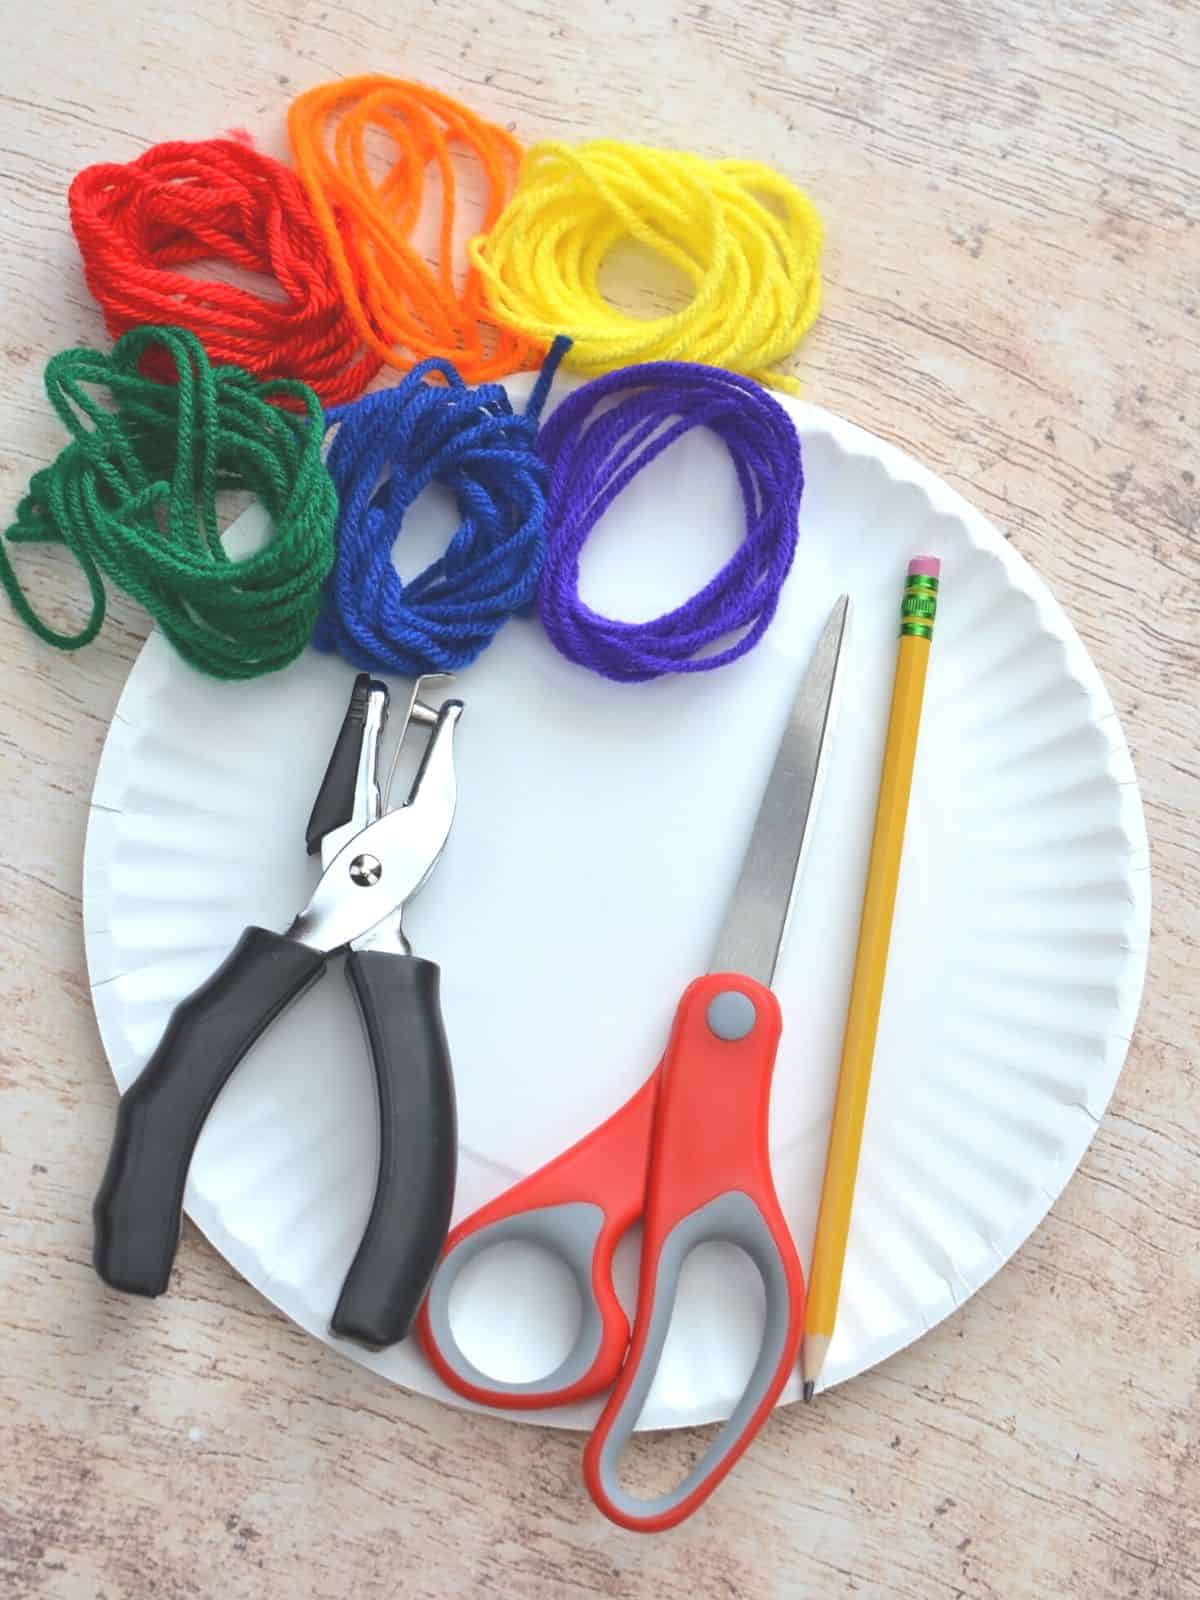 paper plate, hole punch, scissors, pencil, yarn